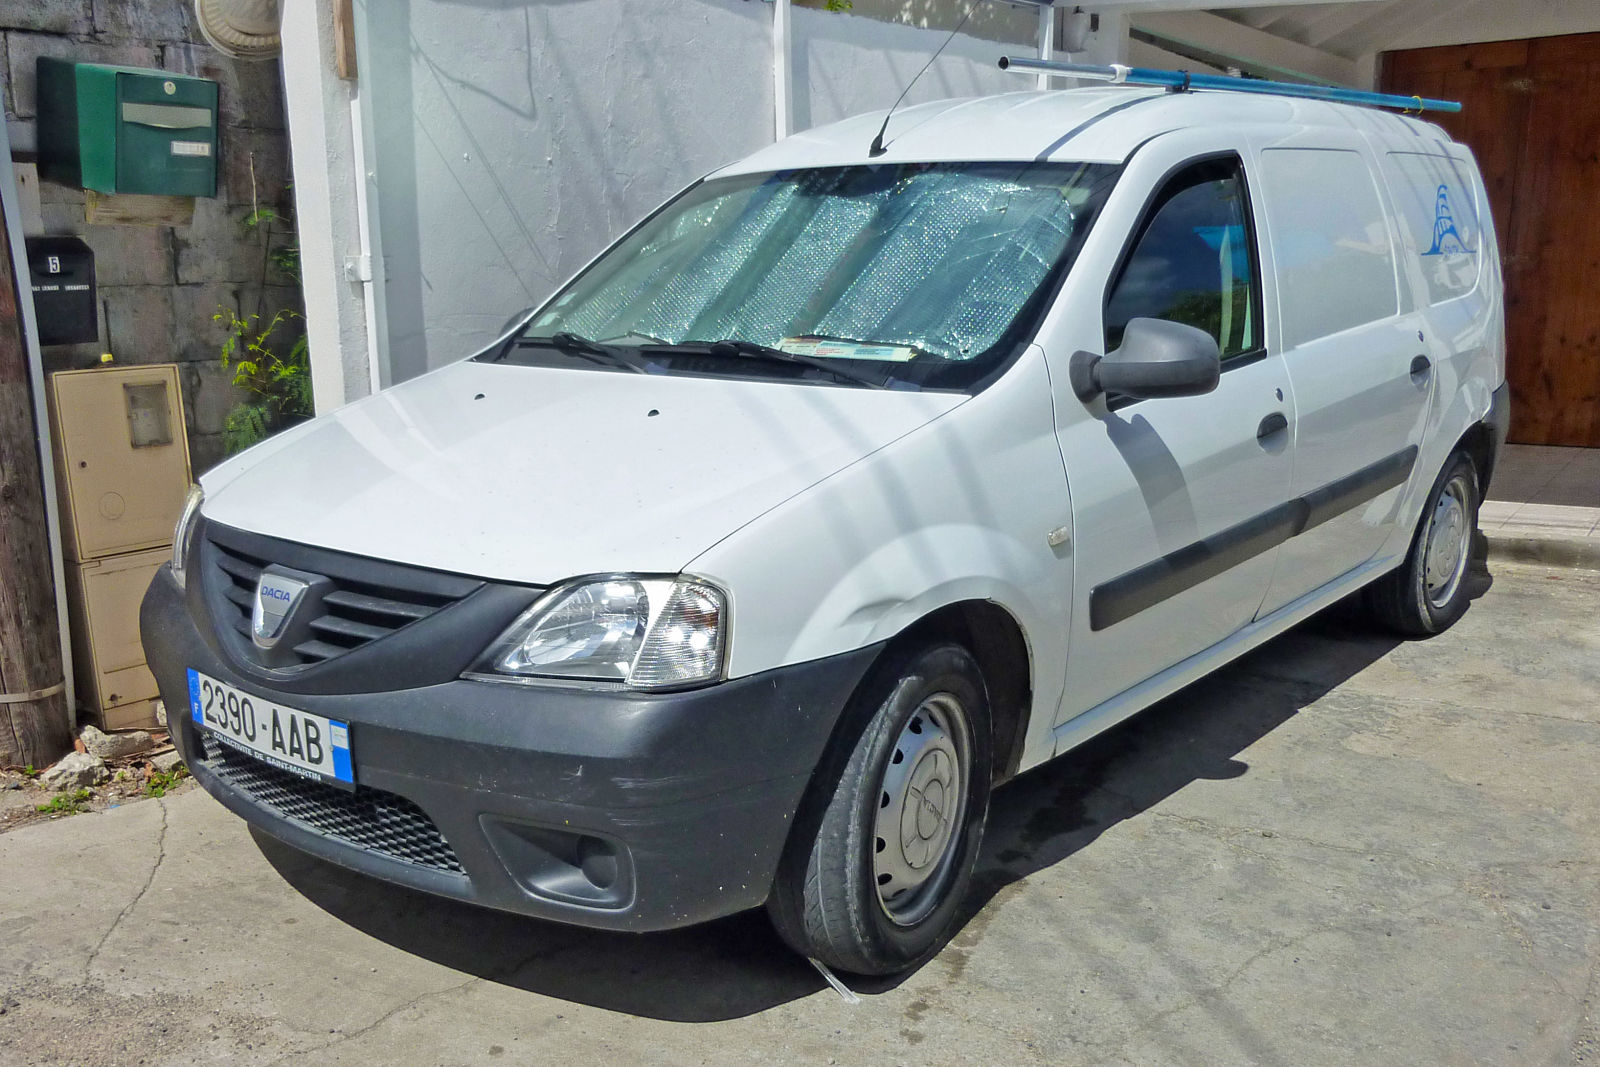 Dacia van